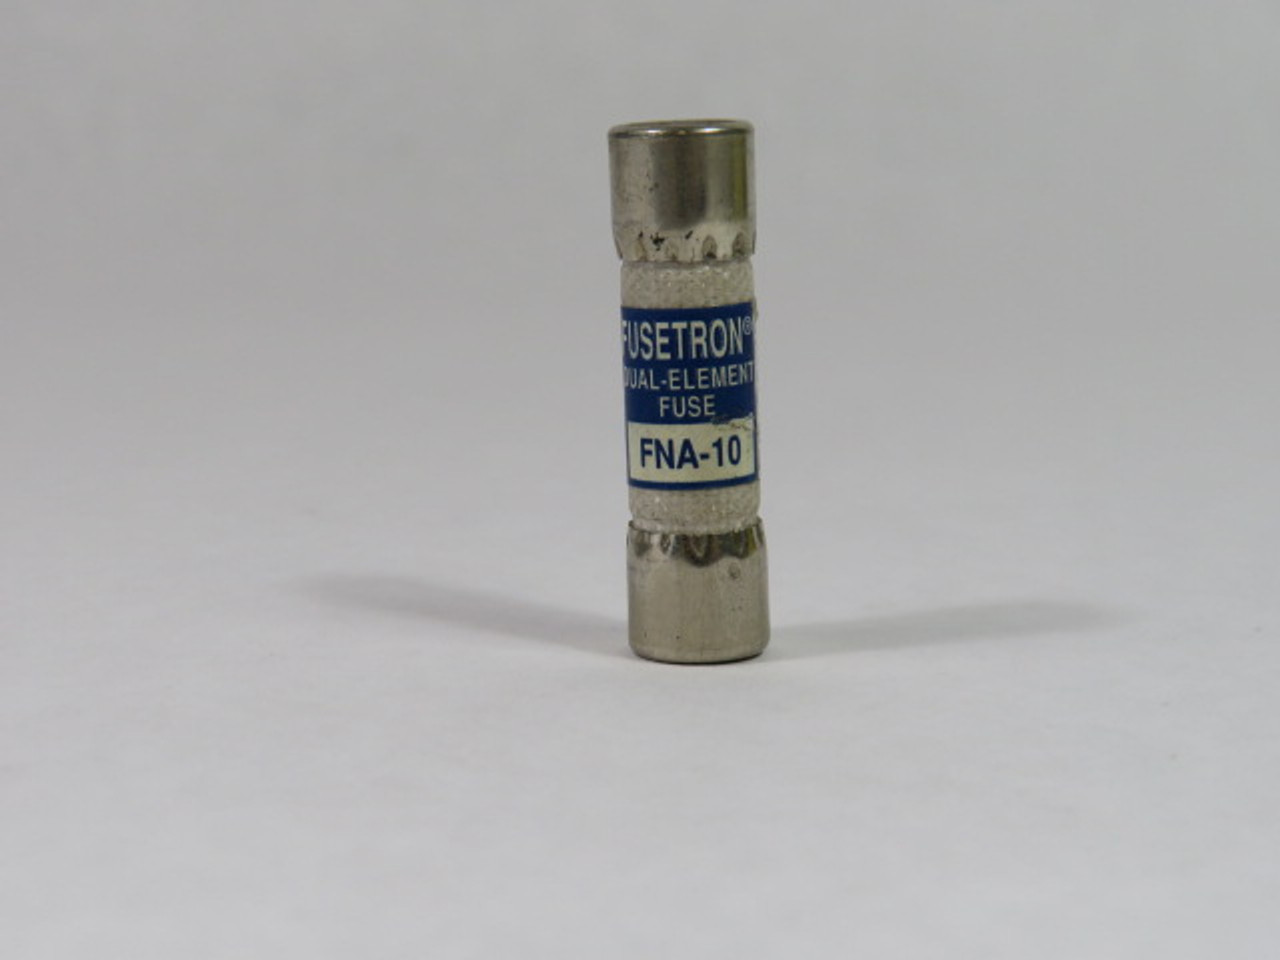 Fusetron FNA-10 Dual Element Fuse 10A 125V USED